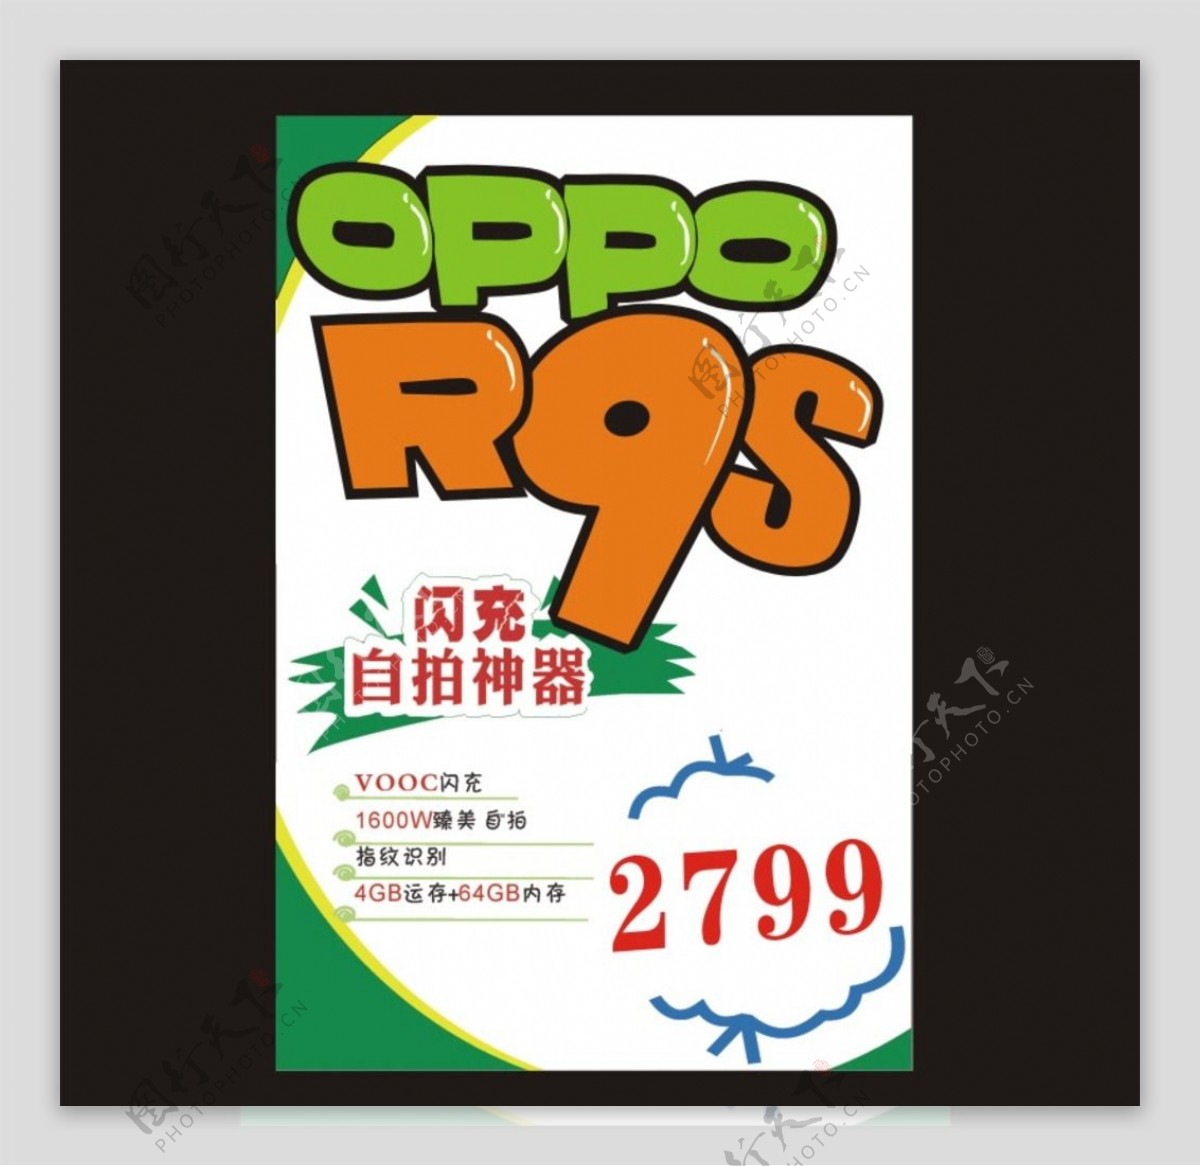 oppoR9s专卖